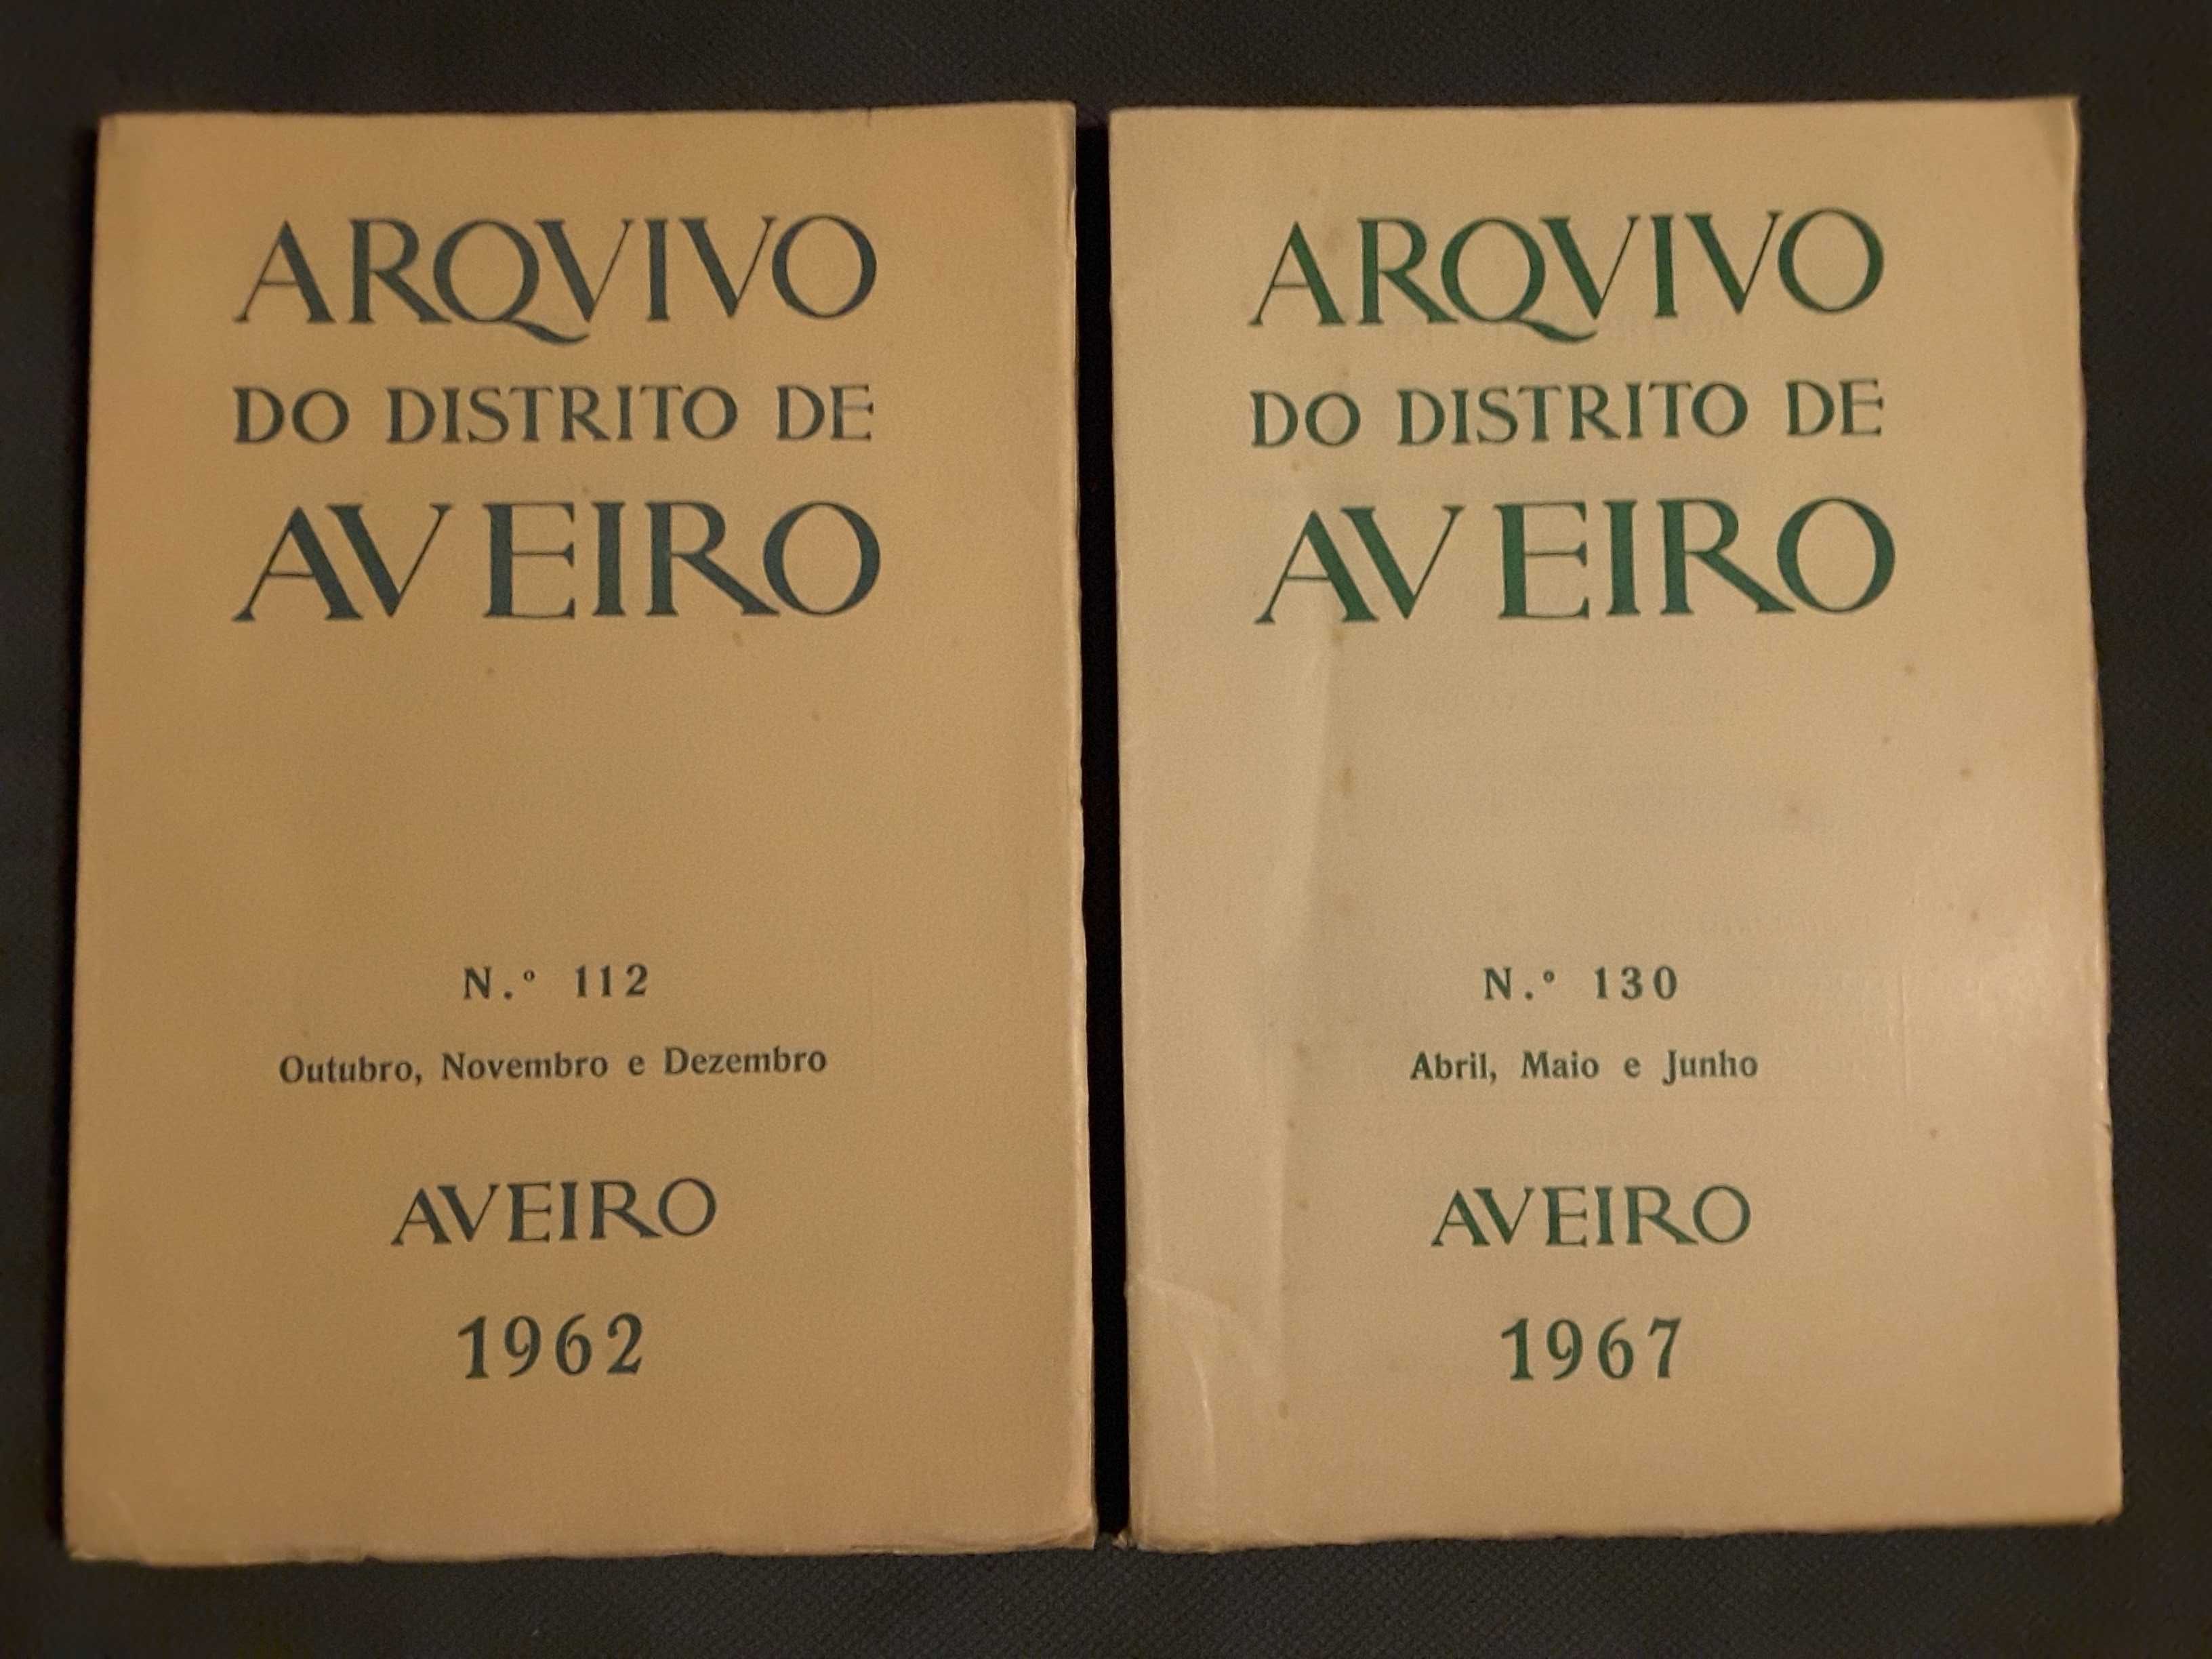 Aveiro Gerência (1960) / Arquivos do Distrito de Aveiro